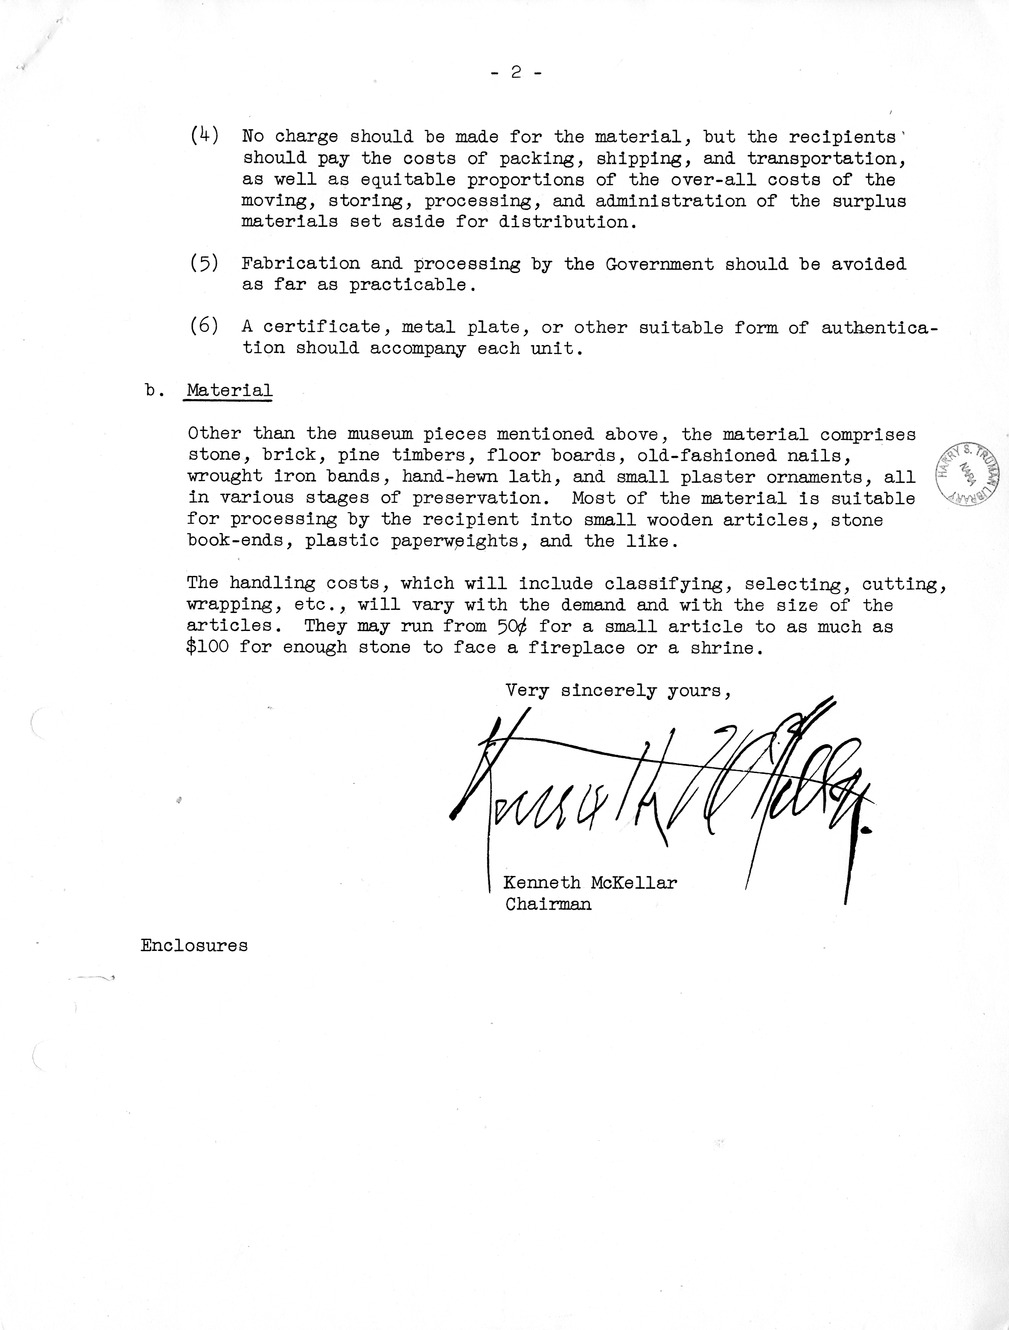 Memorandum from Senator Kenneth McKellar to Members of Congress, with Attachment